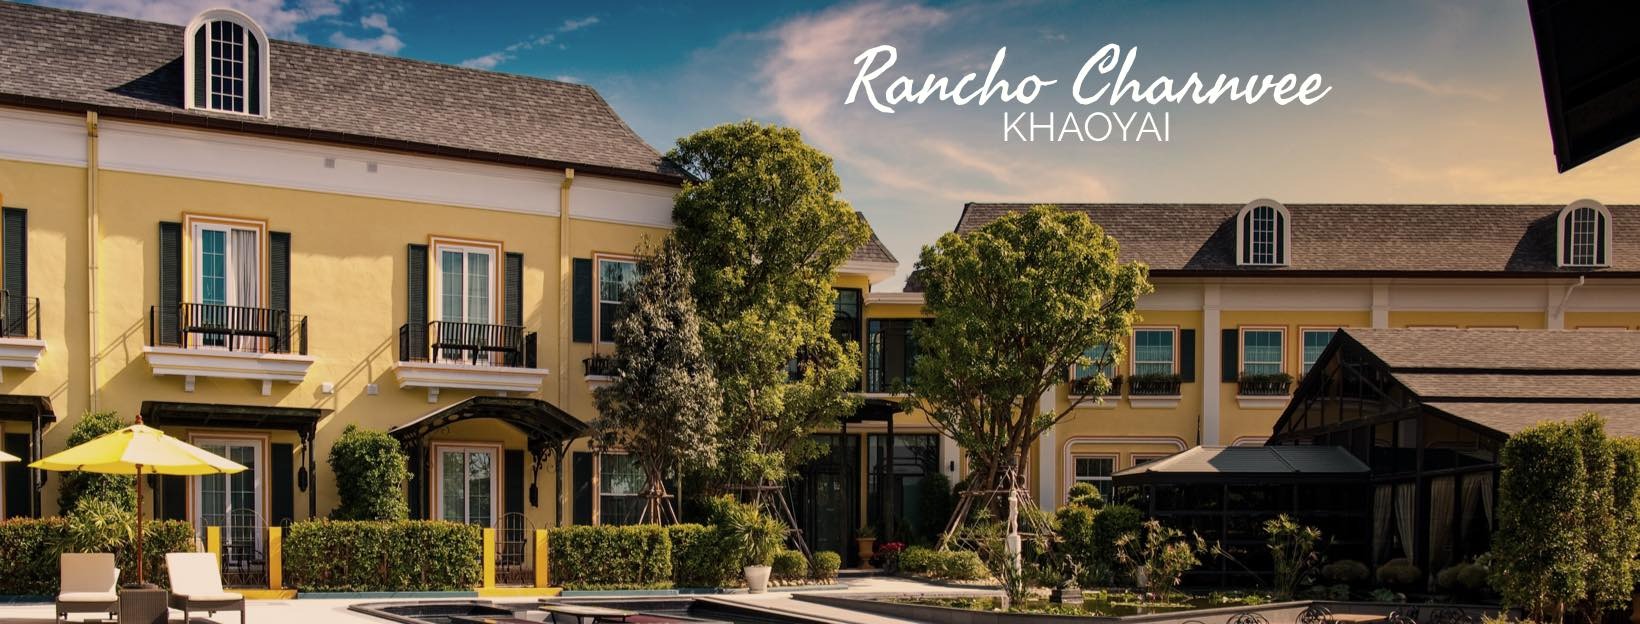 Rancho Charnvee Resort